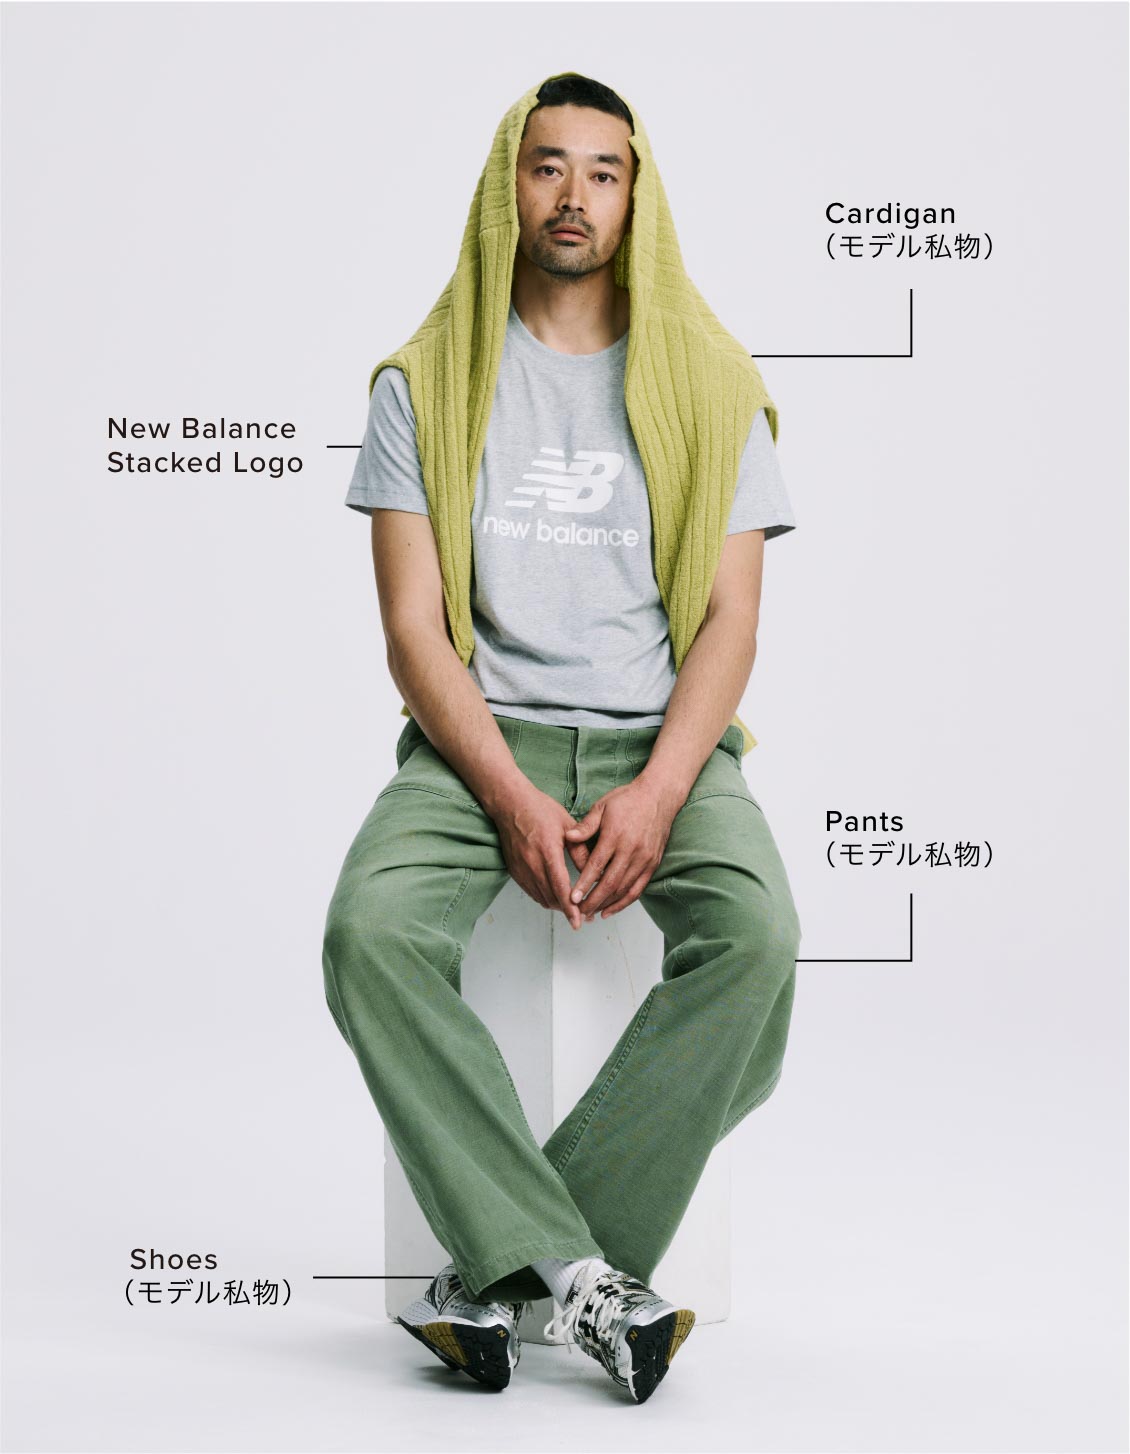 Yoichi Owashi コーディネート詳細 Tシャツ:New Balance Stacked Logo, Cardigan:モデル私物, Pants:モデル私物, Shoes:モデル私物